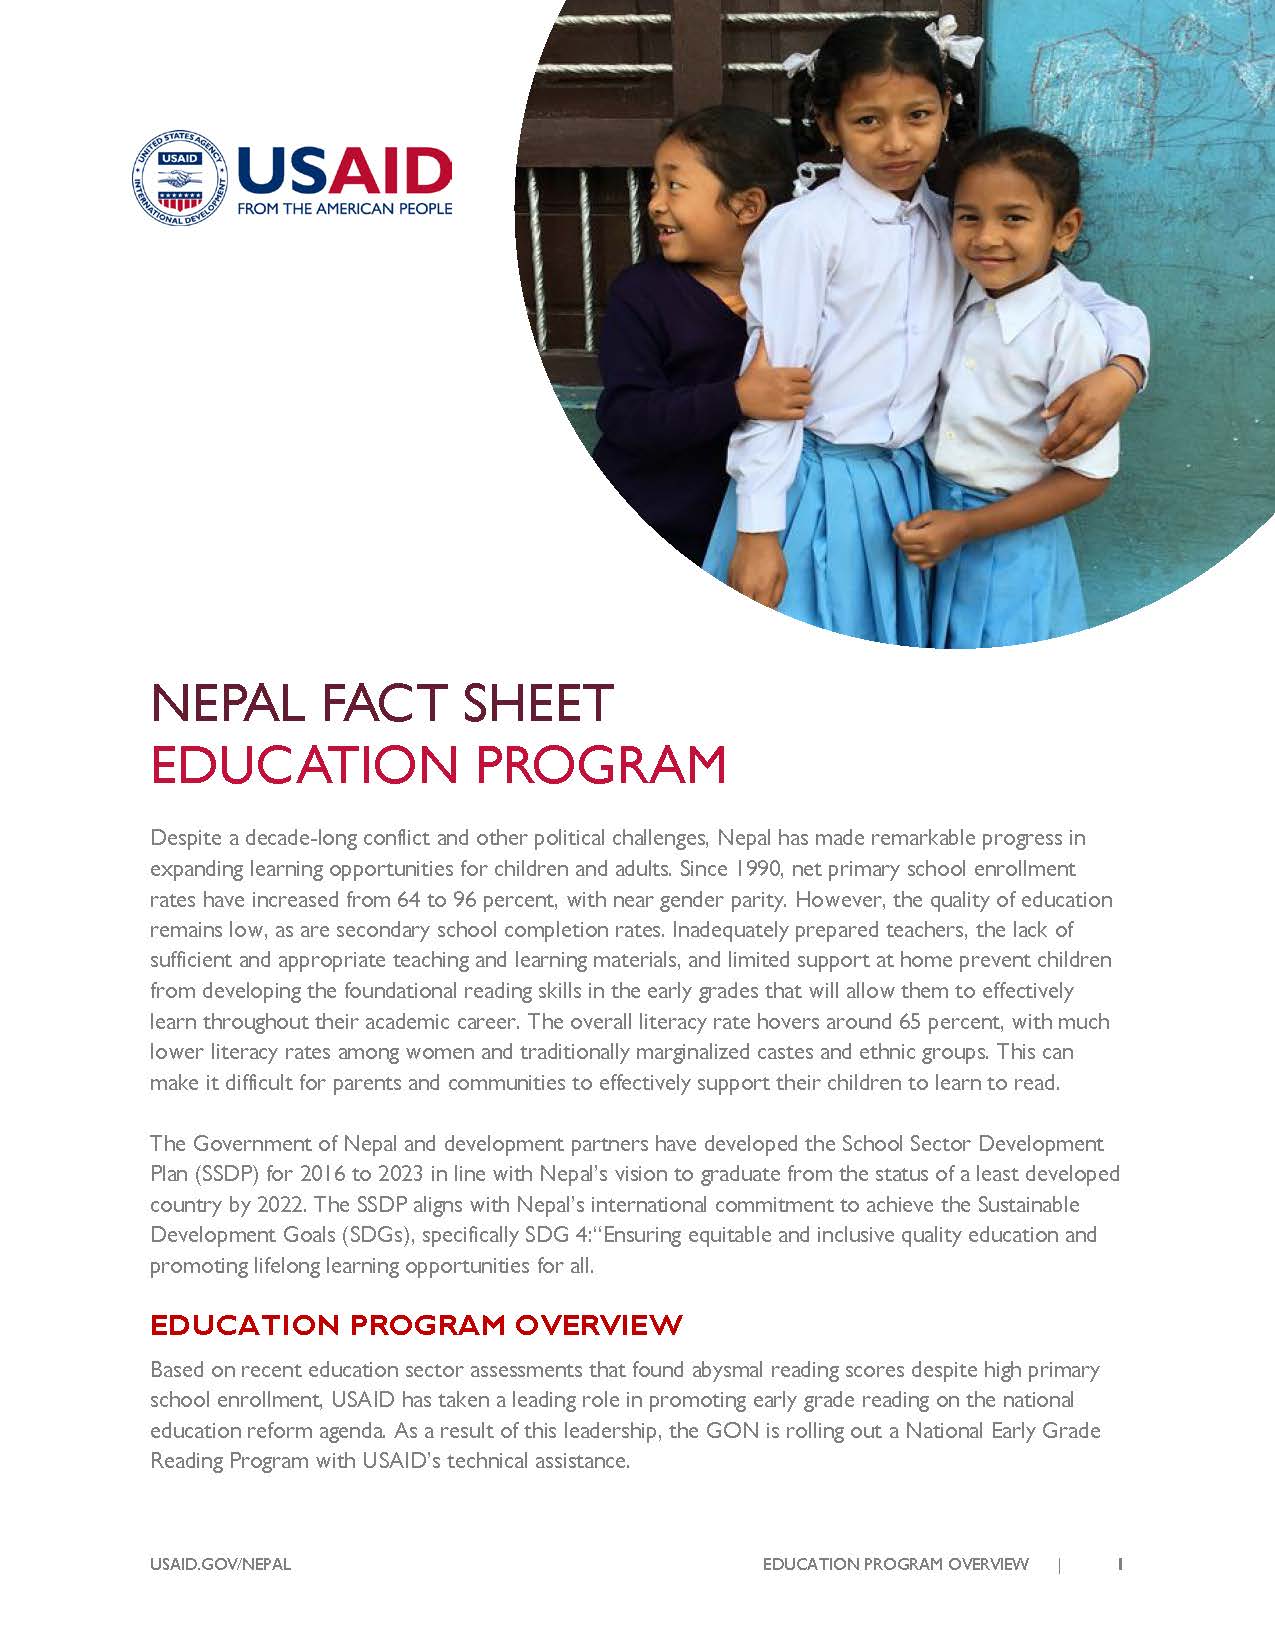 Fact Sheet: EDUCATION PROGRAM 